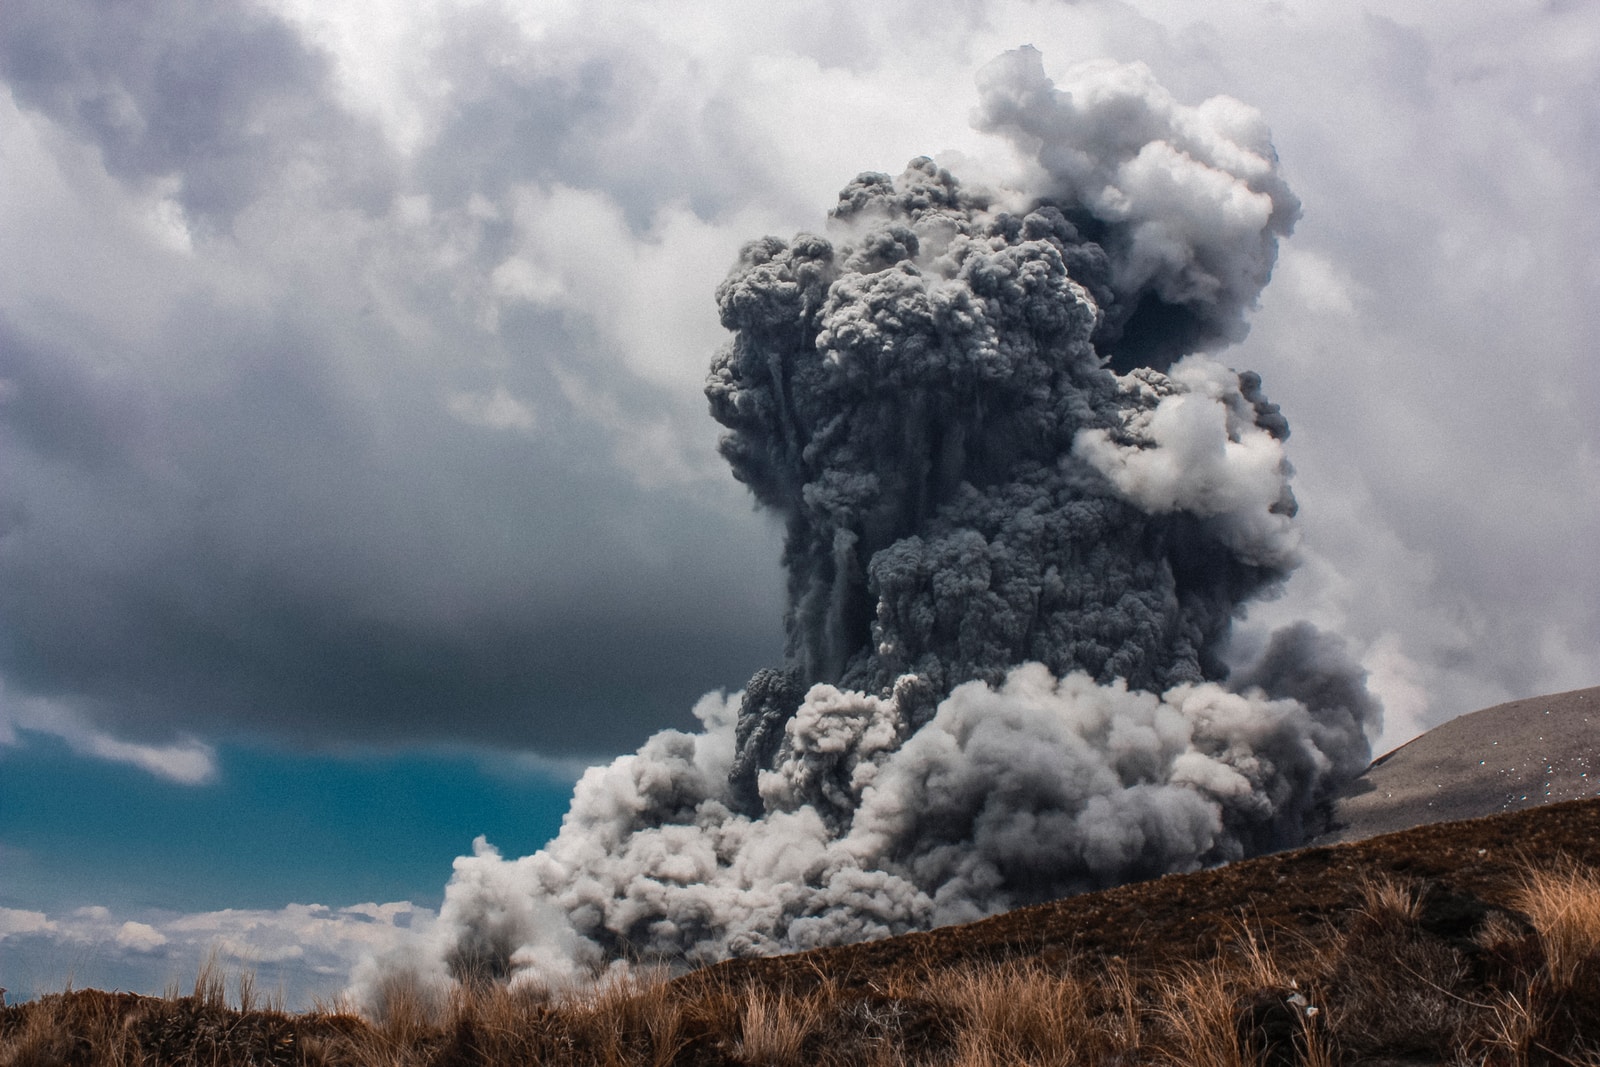 plinian volcanic eruption photograph